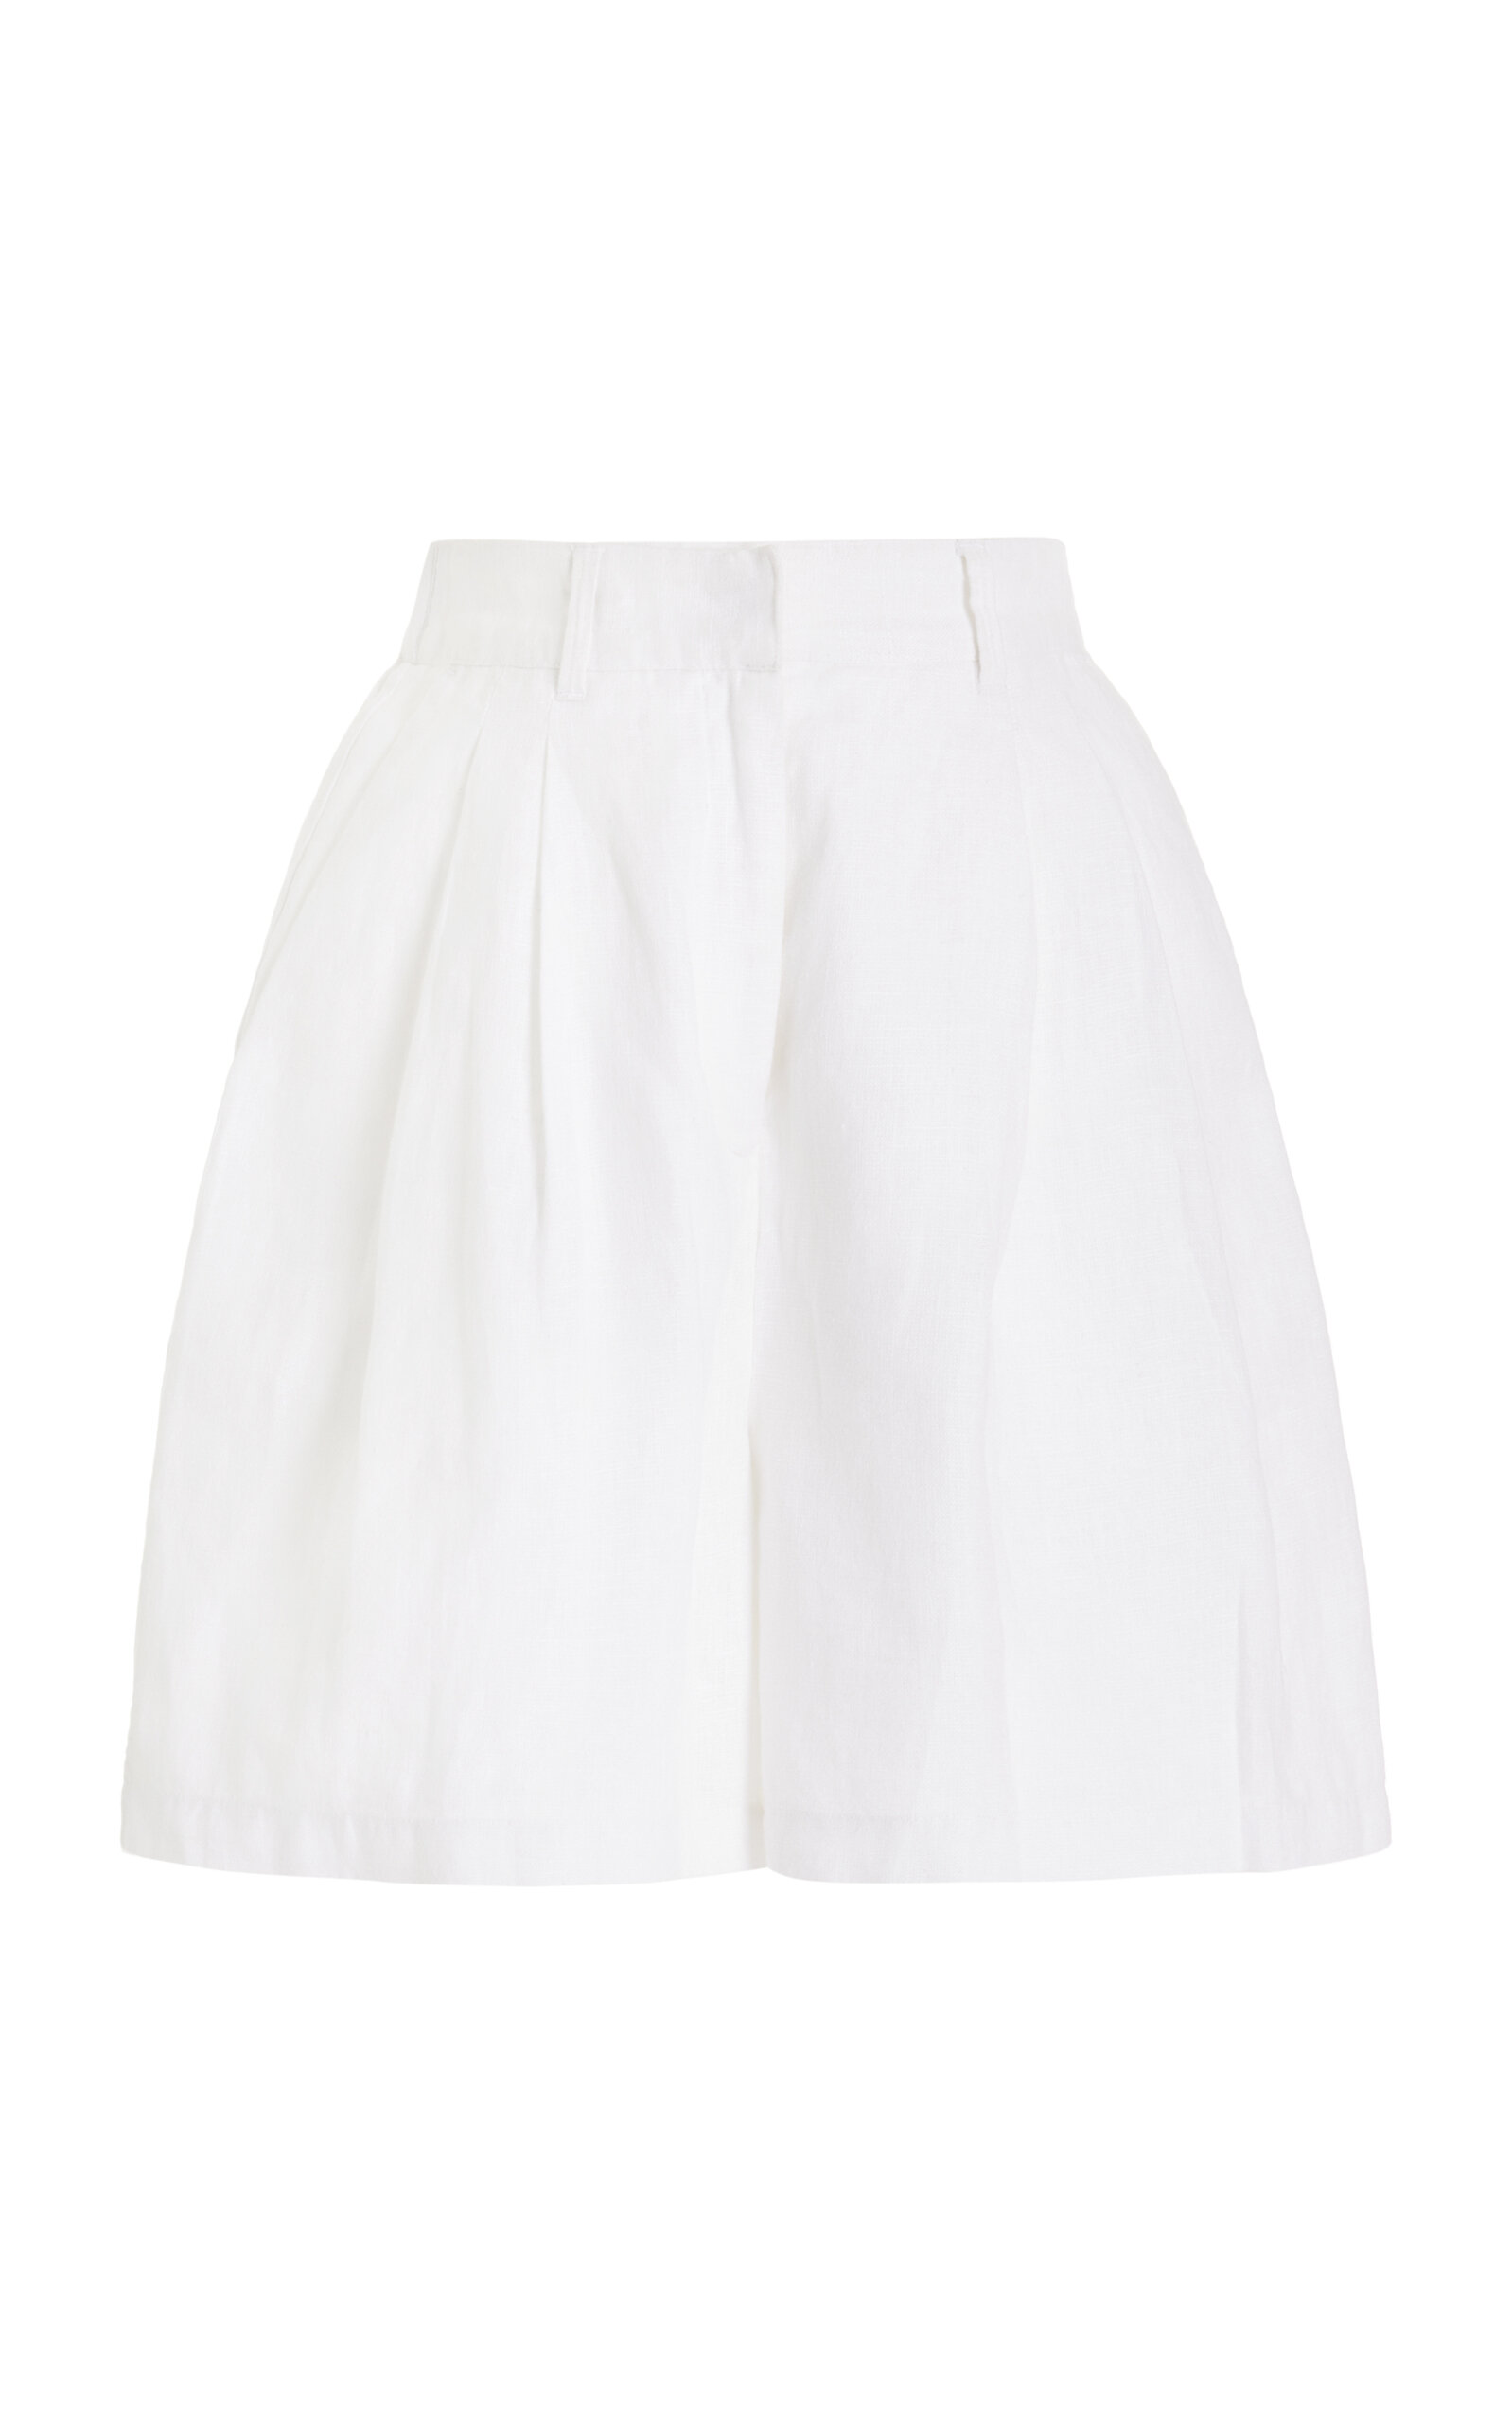 Posse Marchello Pleated Linen Shorts In White